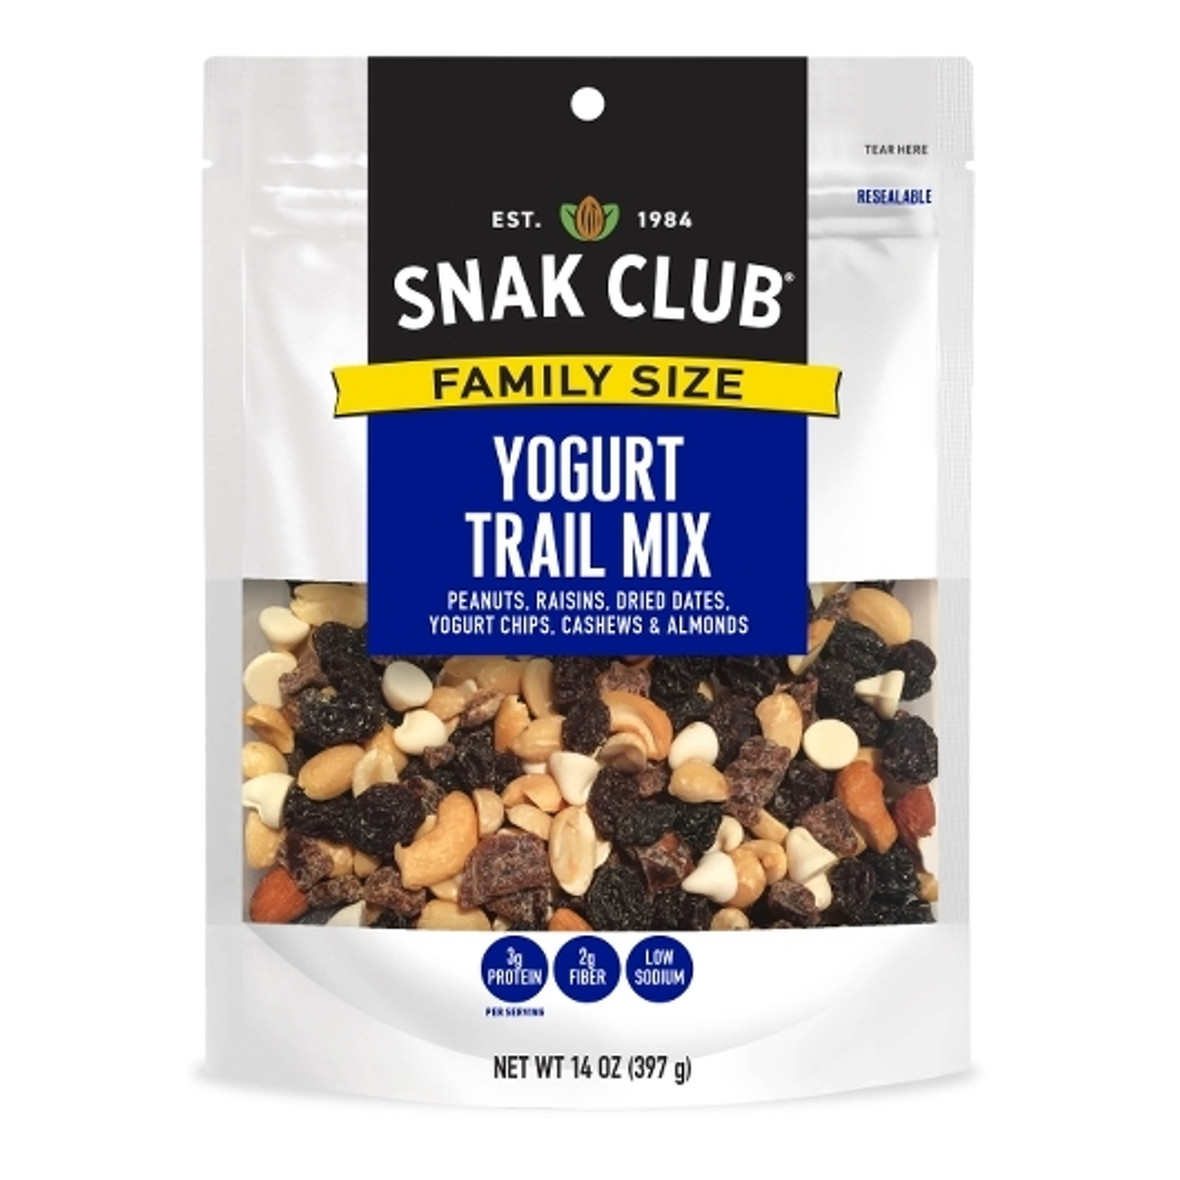 Snak Club Yogurt Nut Mix Family Size, 1 Each, 6 Per Case